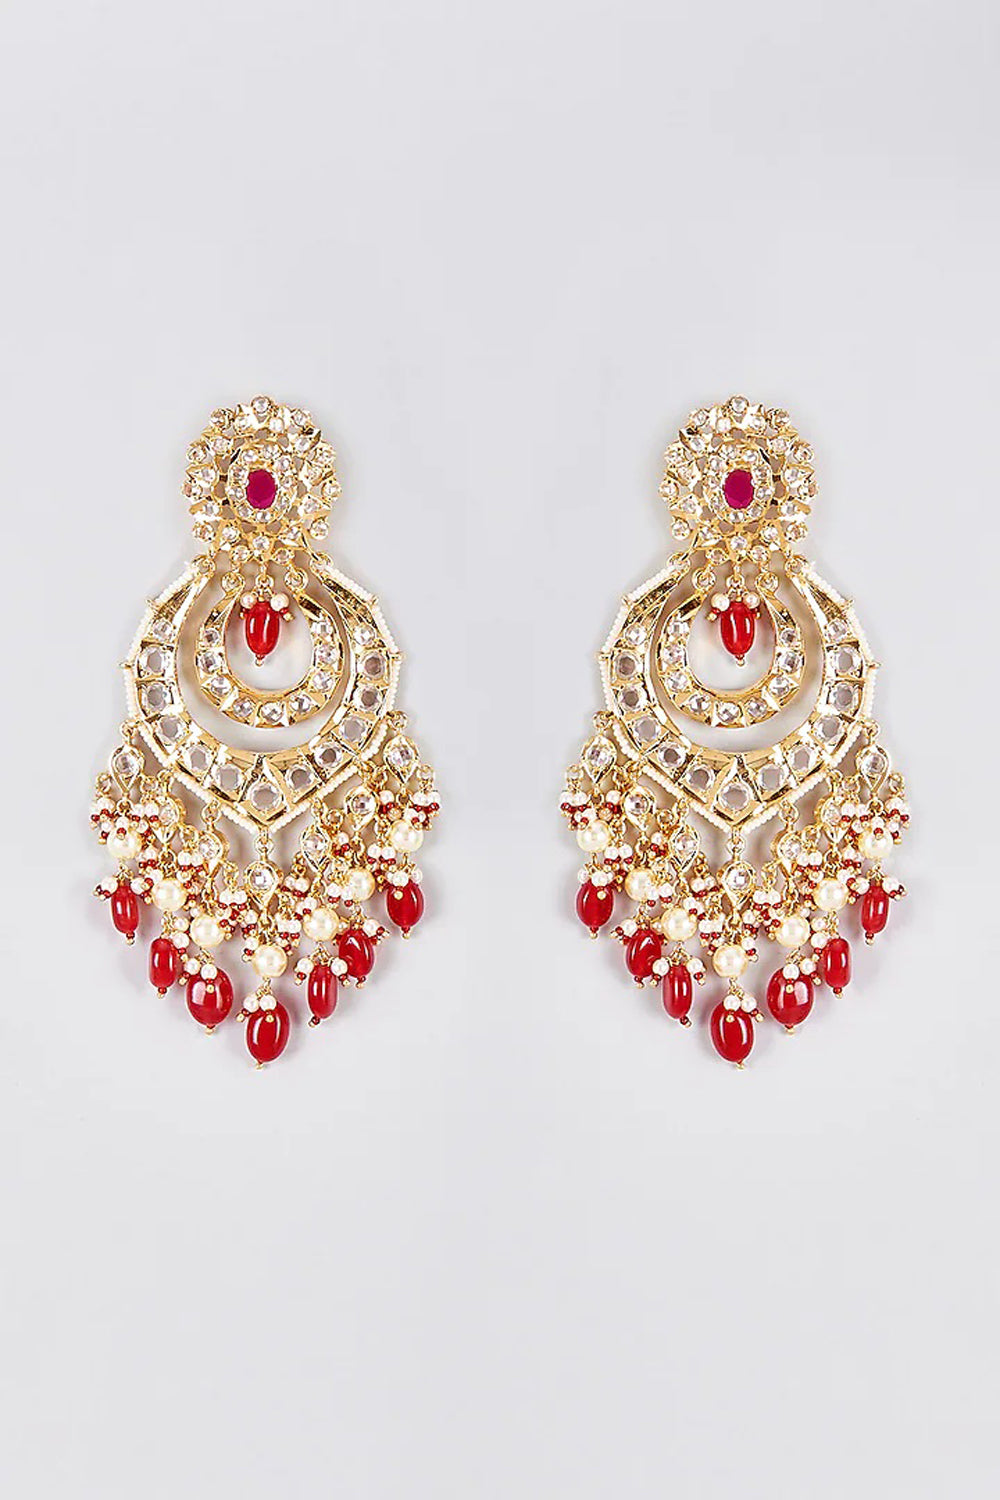 Details 241+ chandbali earrings gold latest